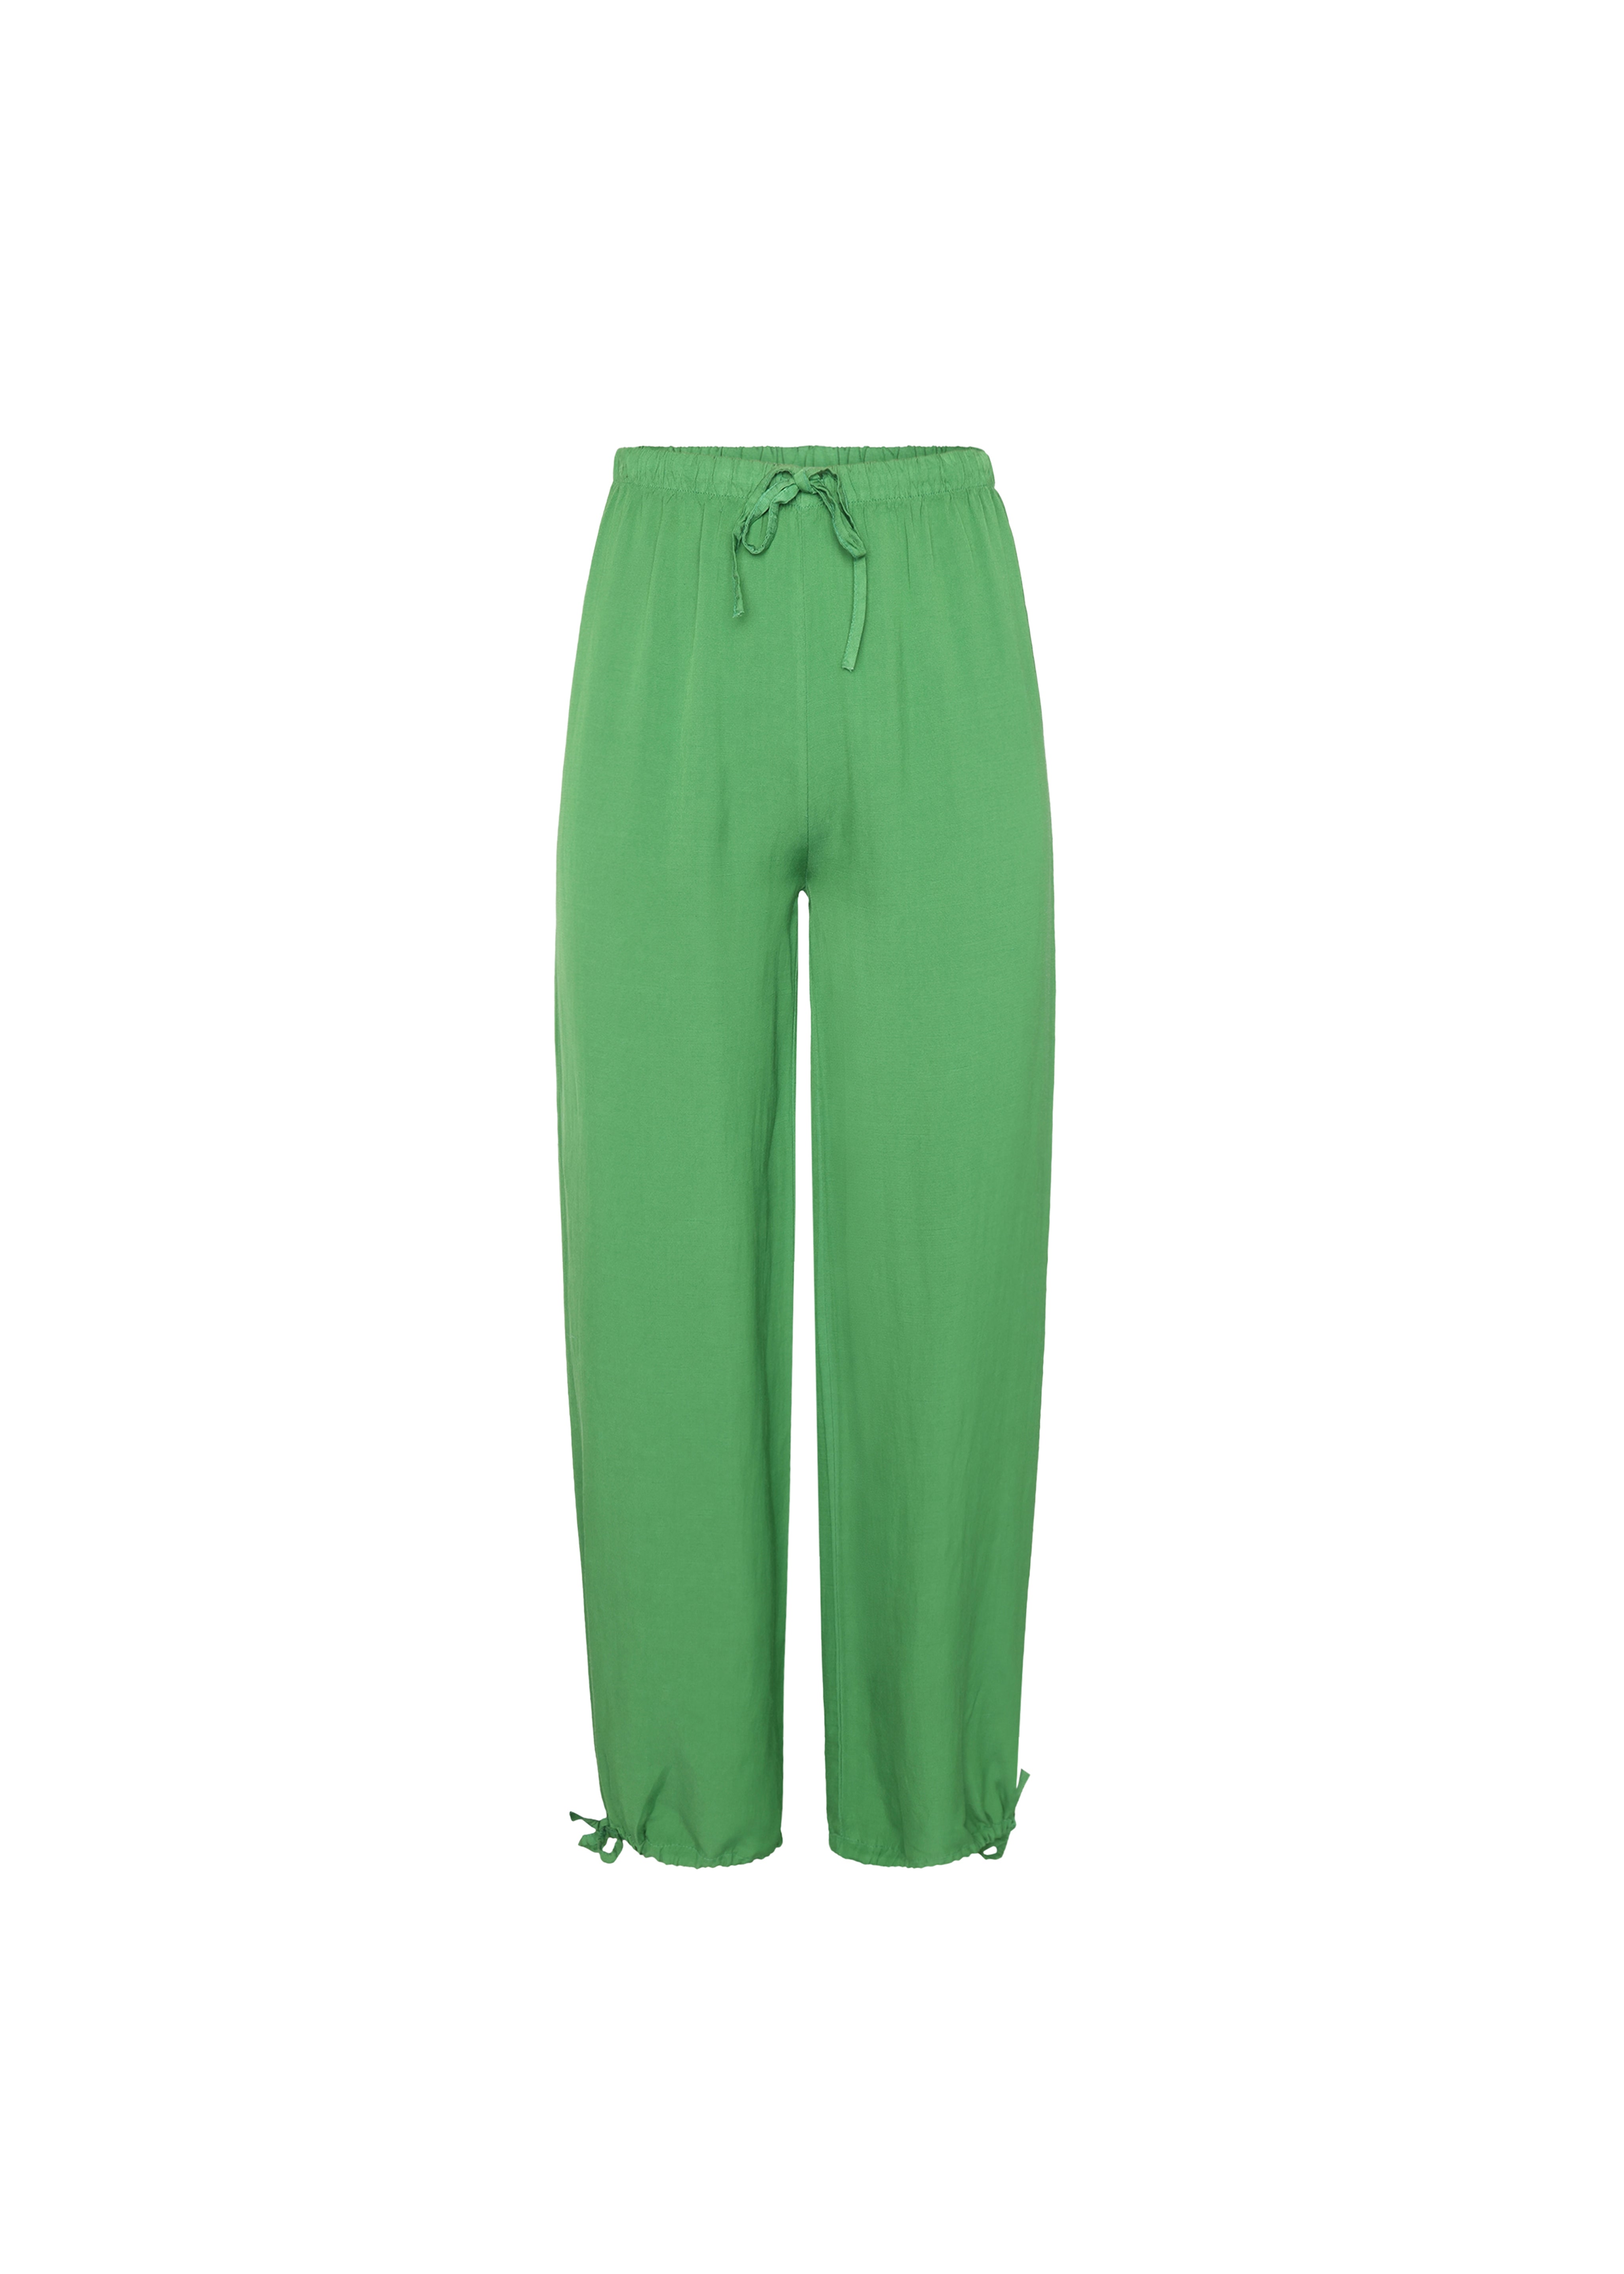 CLODIE Emerald pants